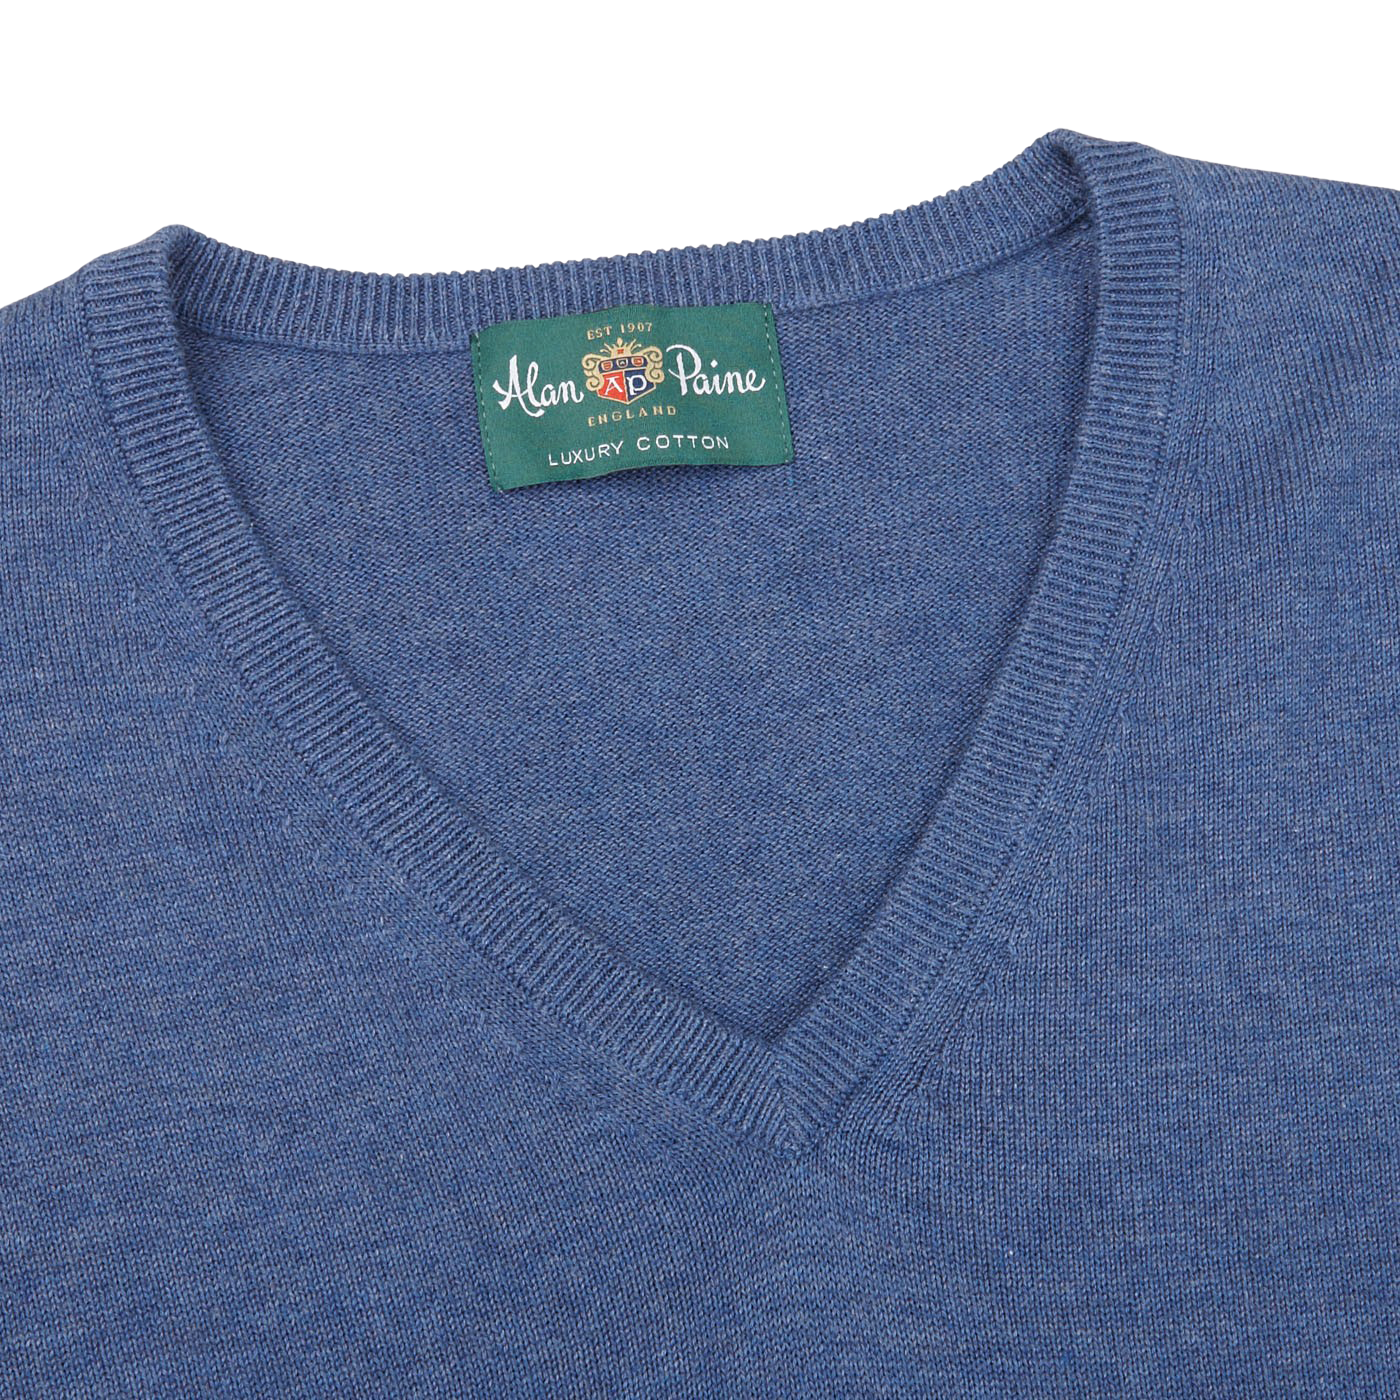 Alan Paine Indigo Blue Luxury Cotton V-Neck Sweater Collar